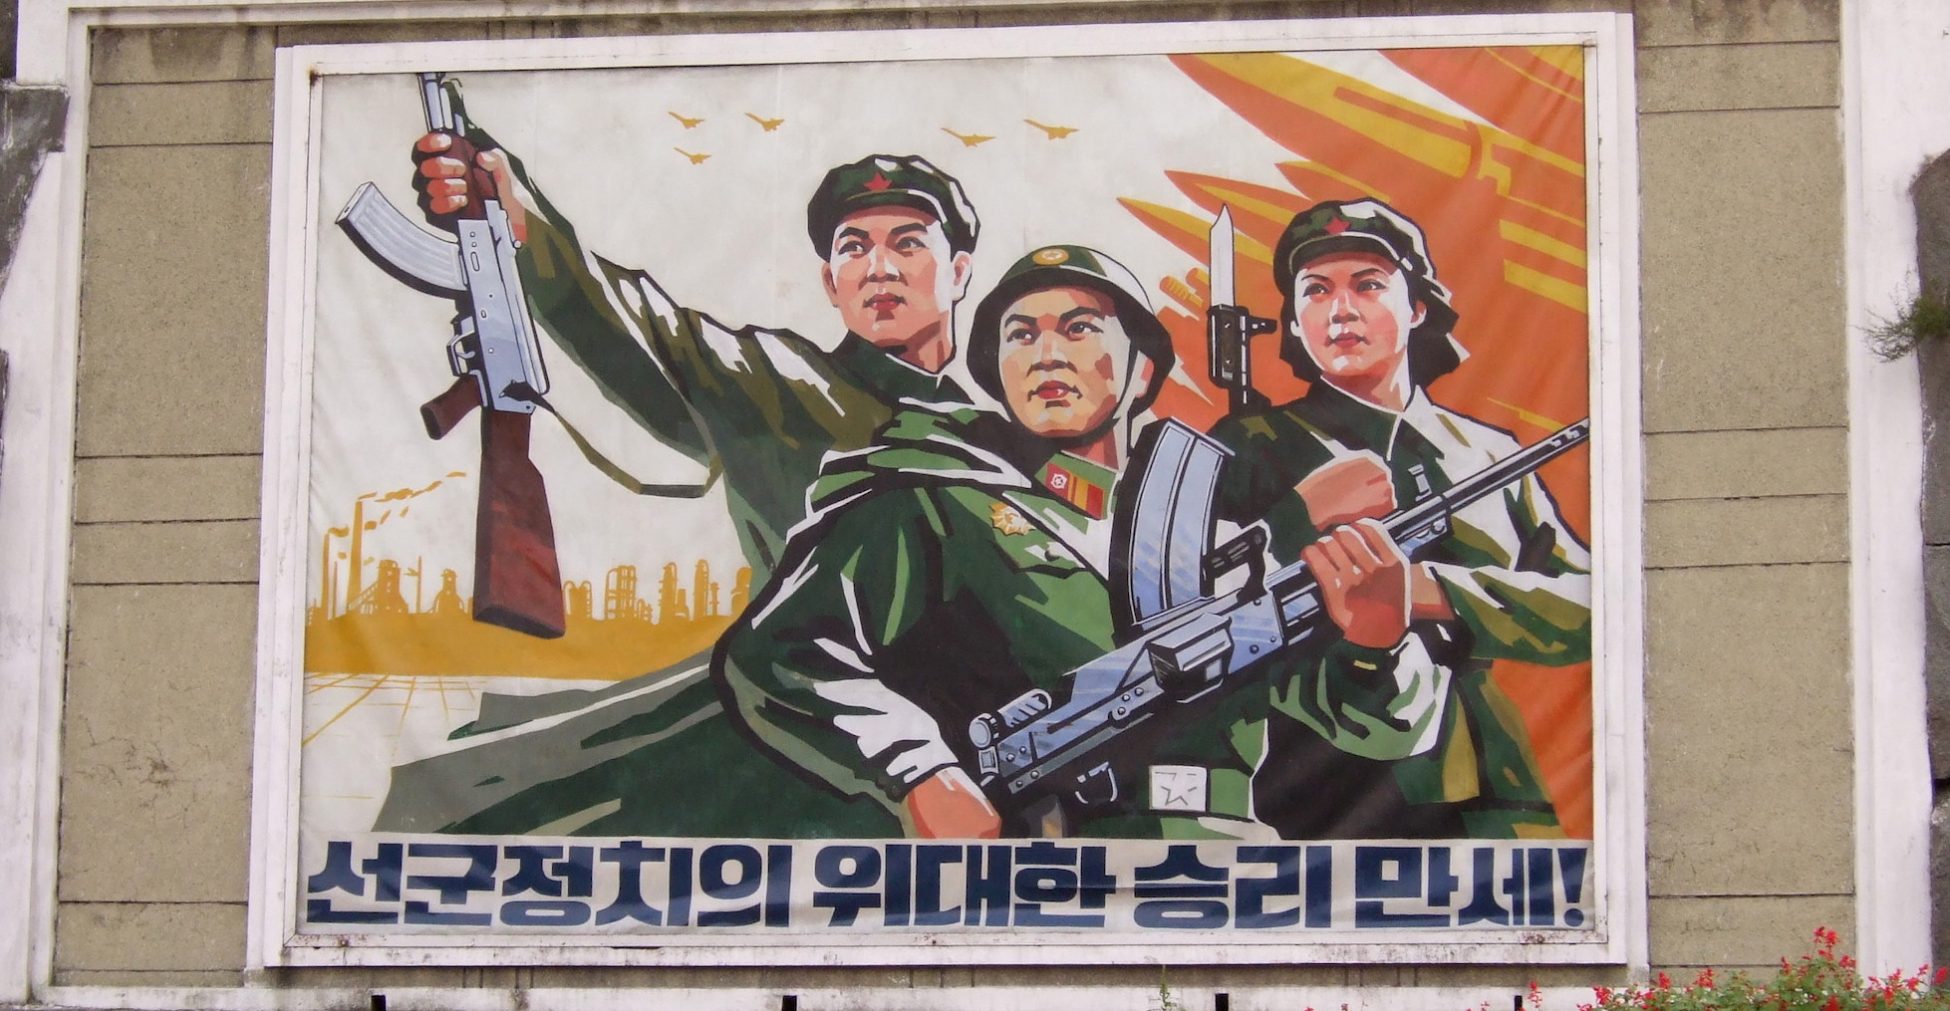 North Korean Propaganda Poster / Pic by Will de Freitas